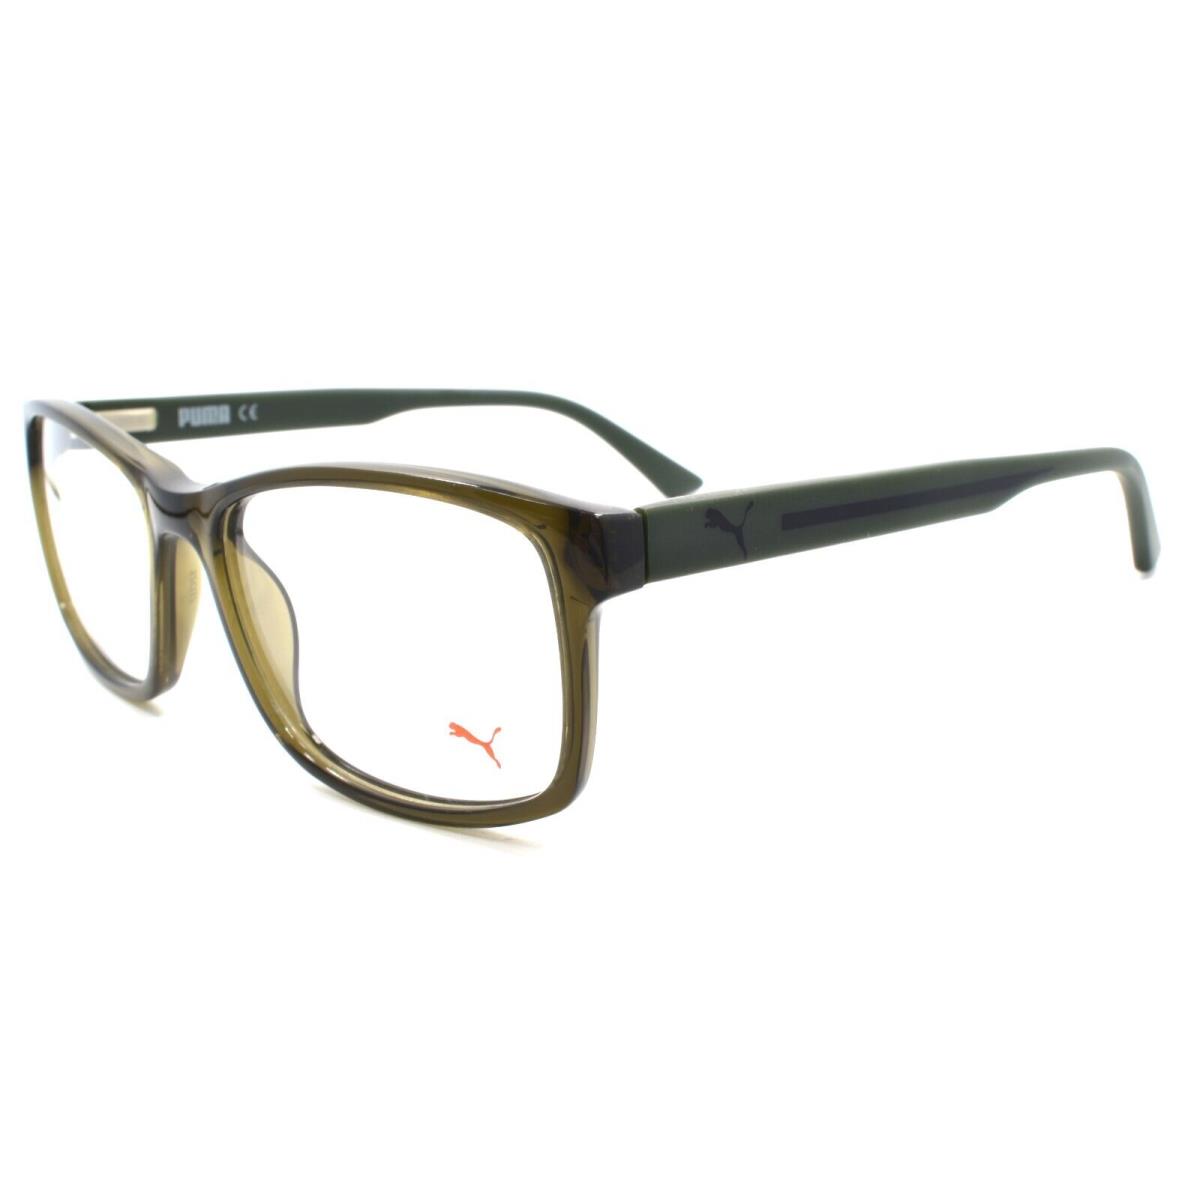 Puma PE0009O 004 Eyeglasses Frames 52-17-140 Olive Green